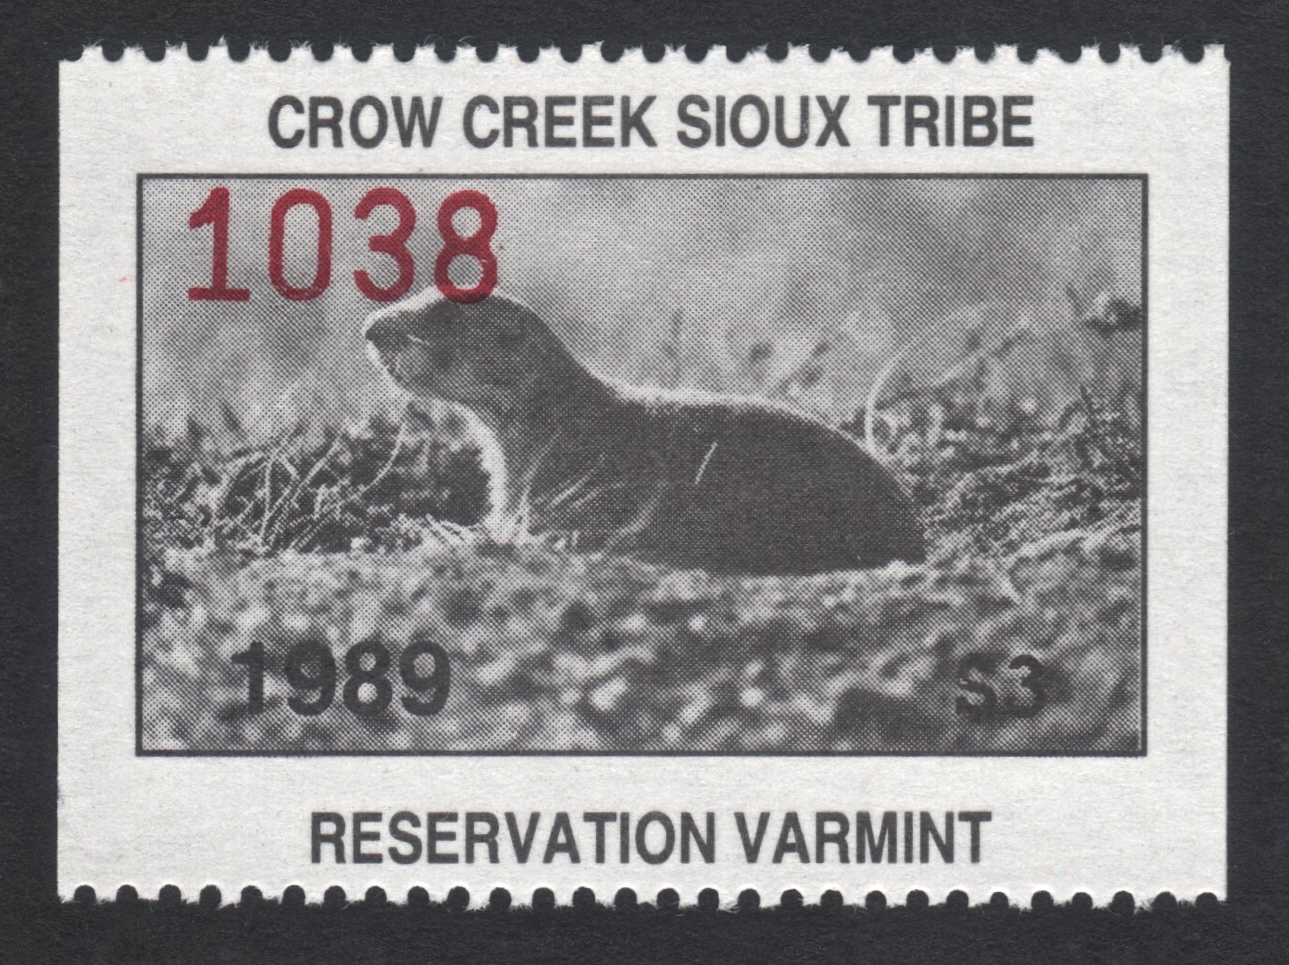 1989 Crow Creek Reservation Varmint